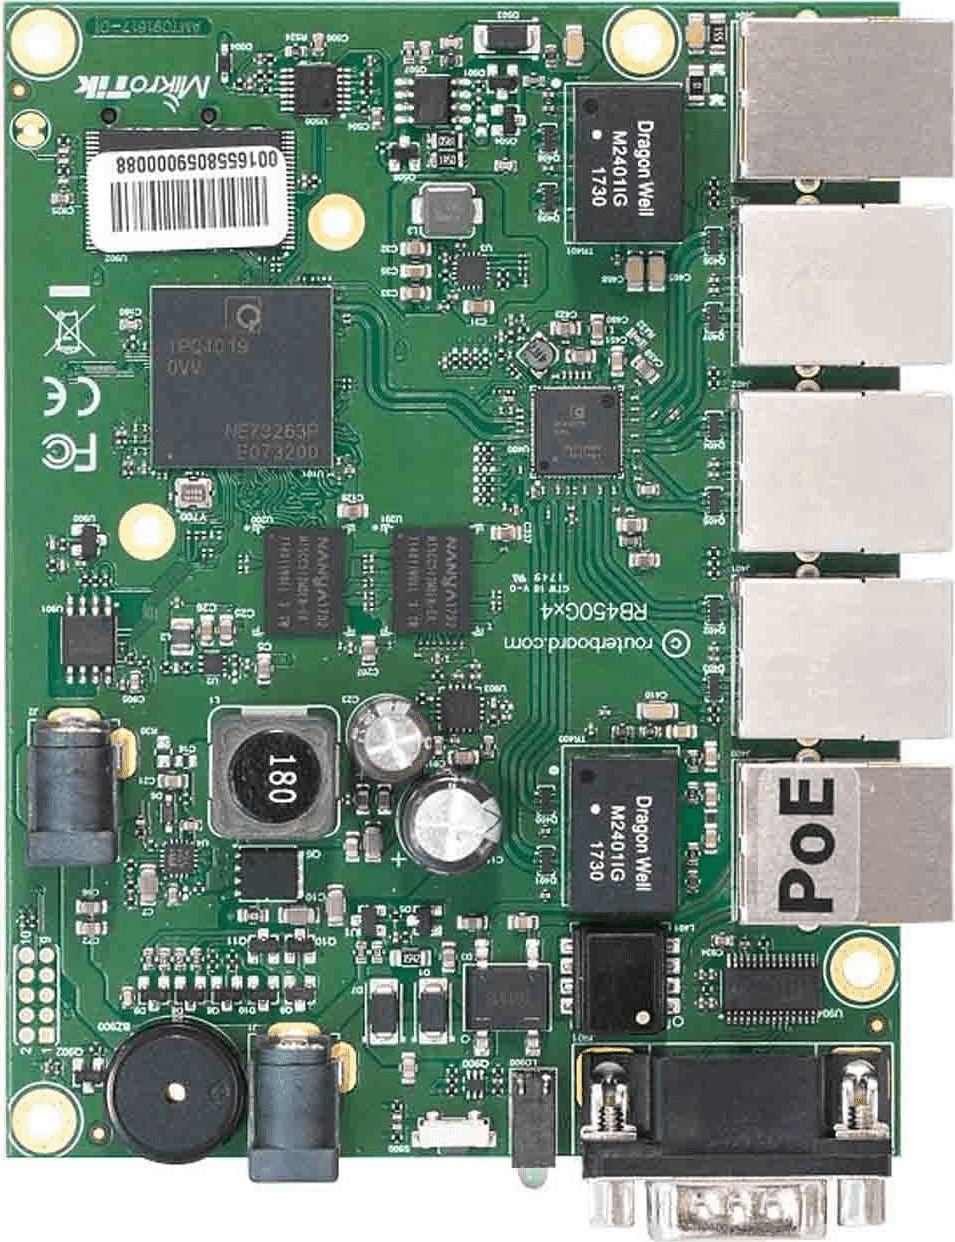 MikroTik MikroTik RouterBOARD RB450Gx4, quad-core 716MHz ARM CPU, 1GB RAM, 5x LAN, vč. L5 licence